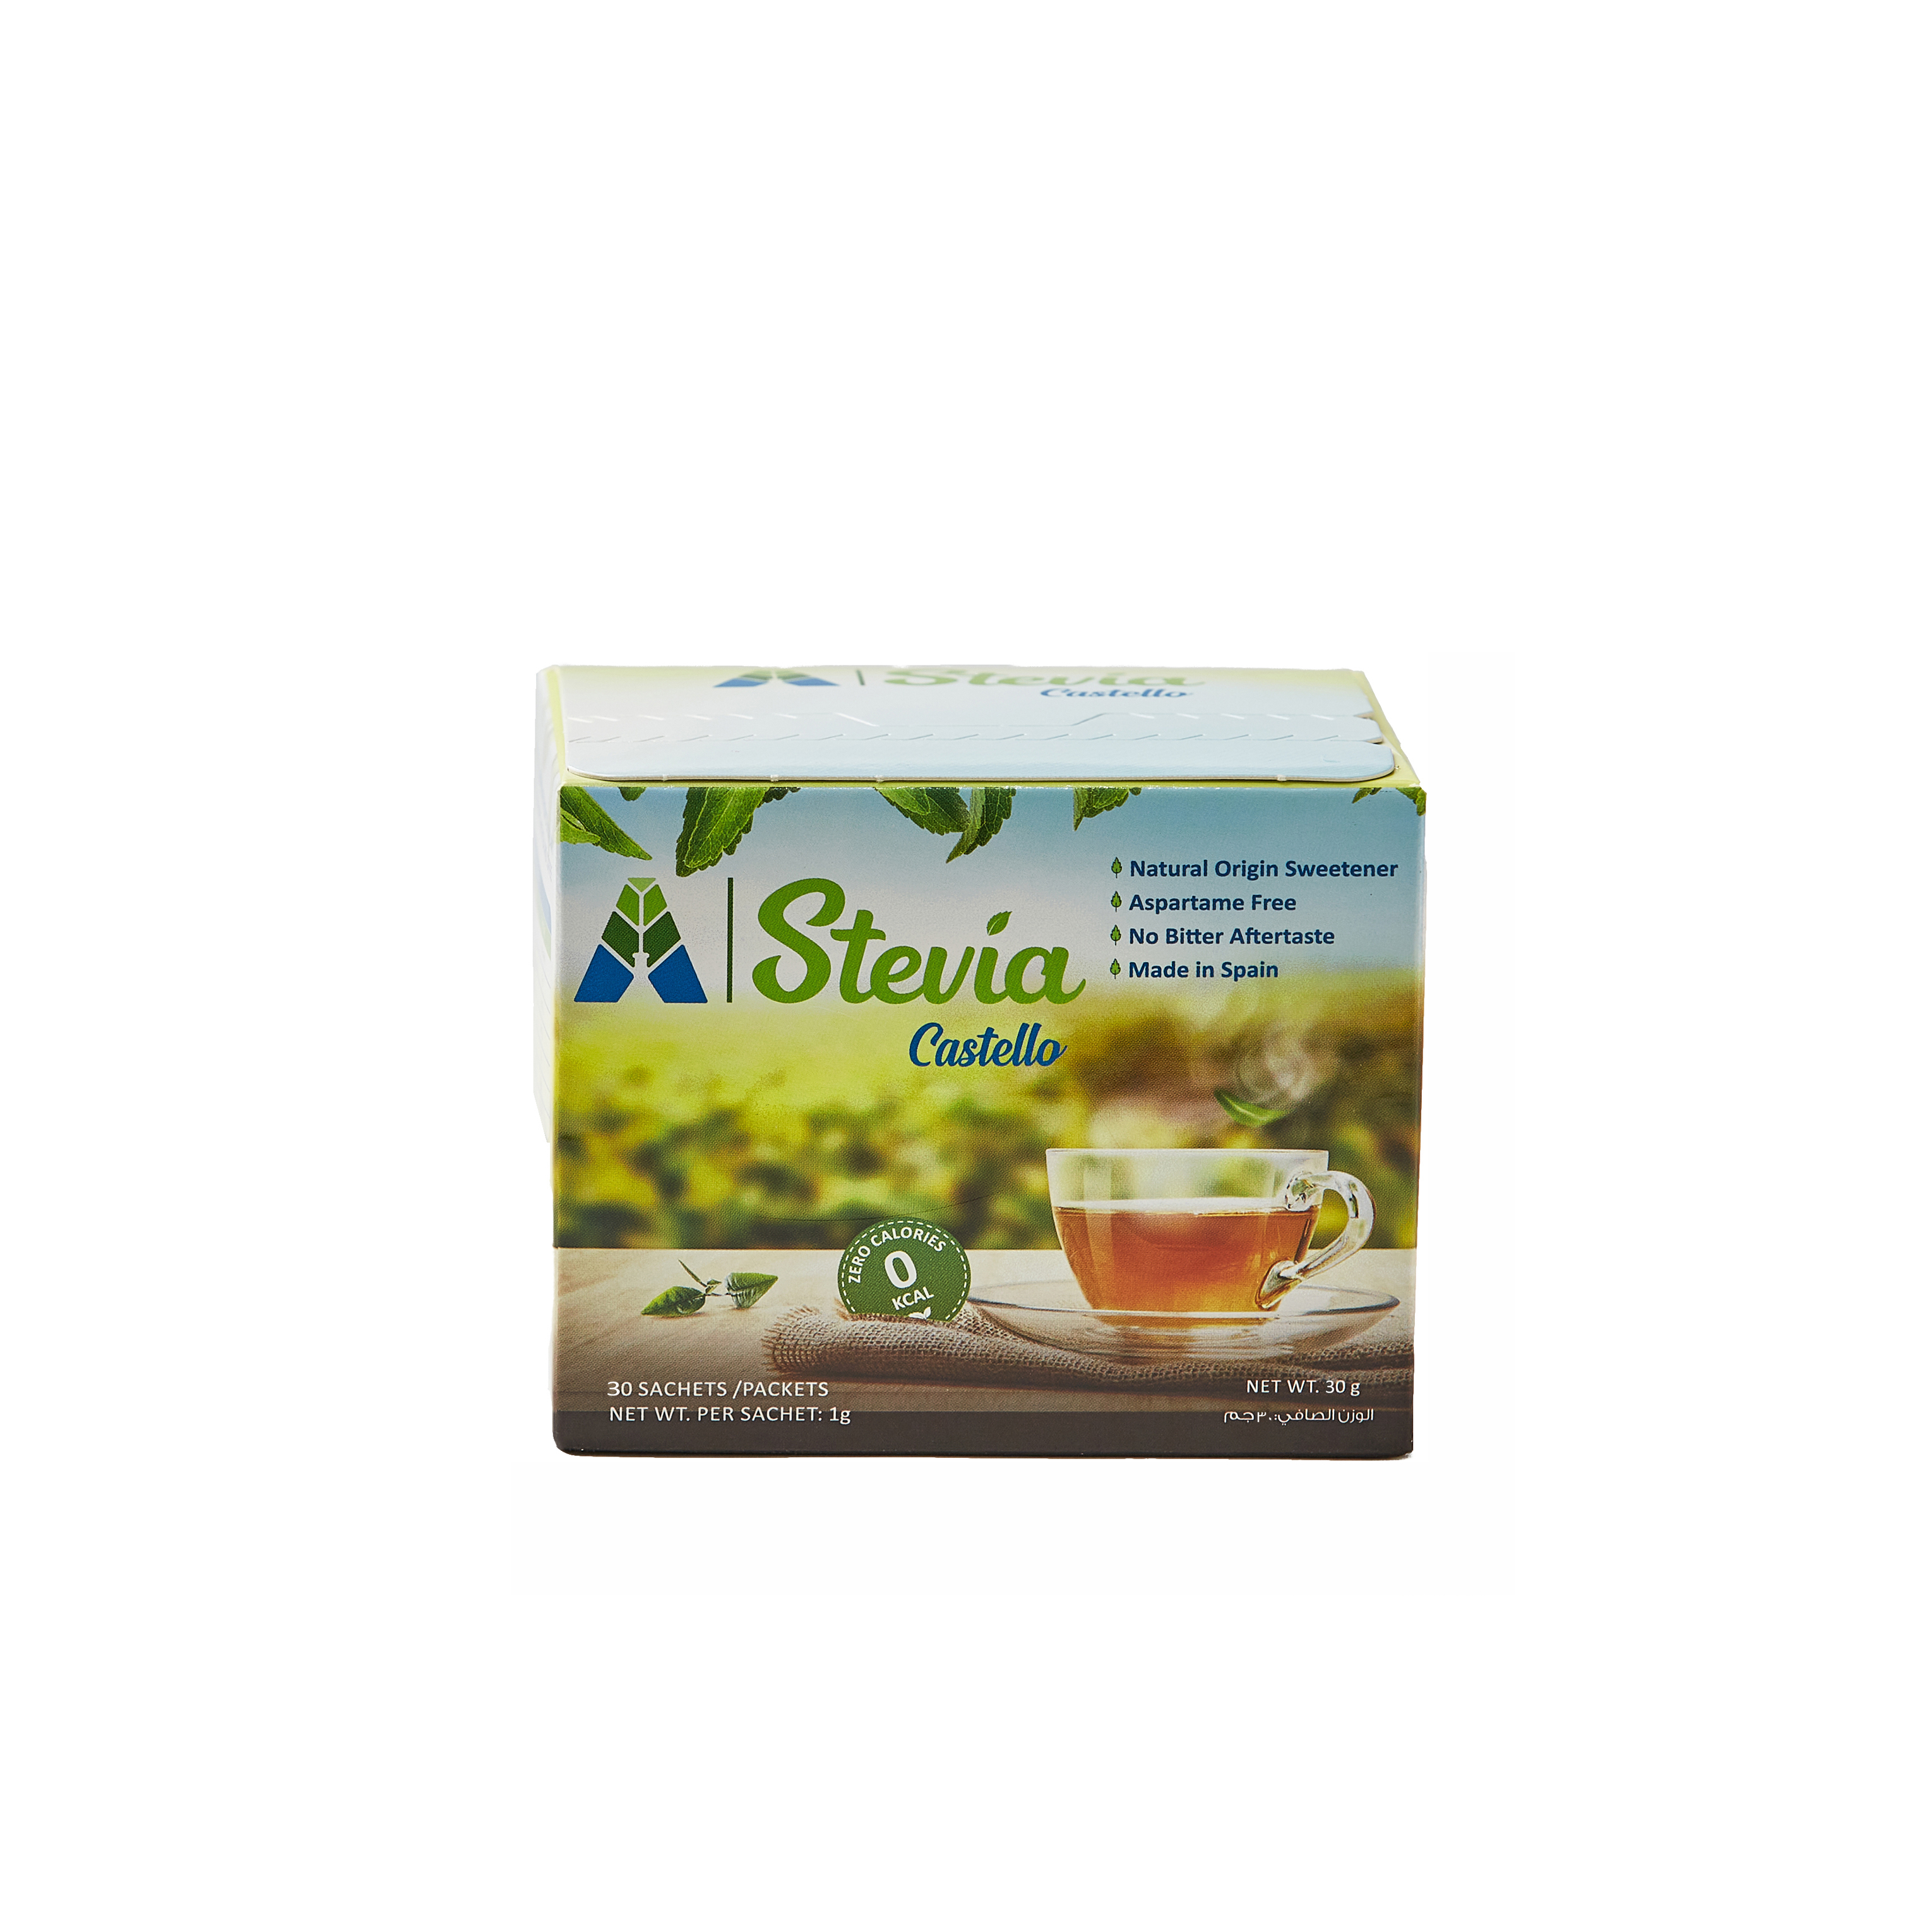 Stevia Castello box of 30 sachets zero calorie sweetener